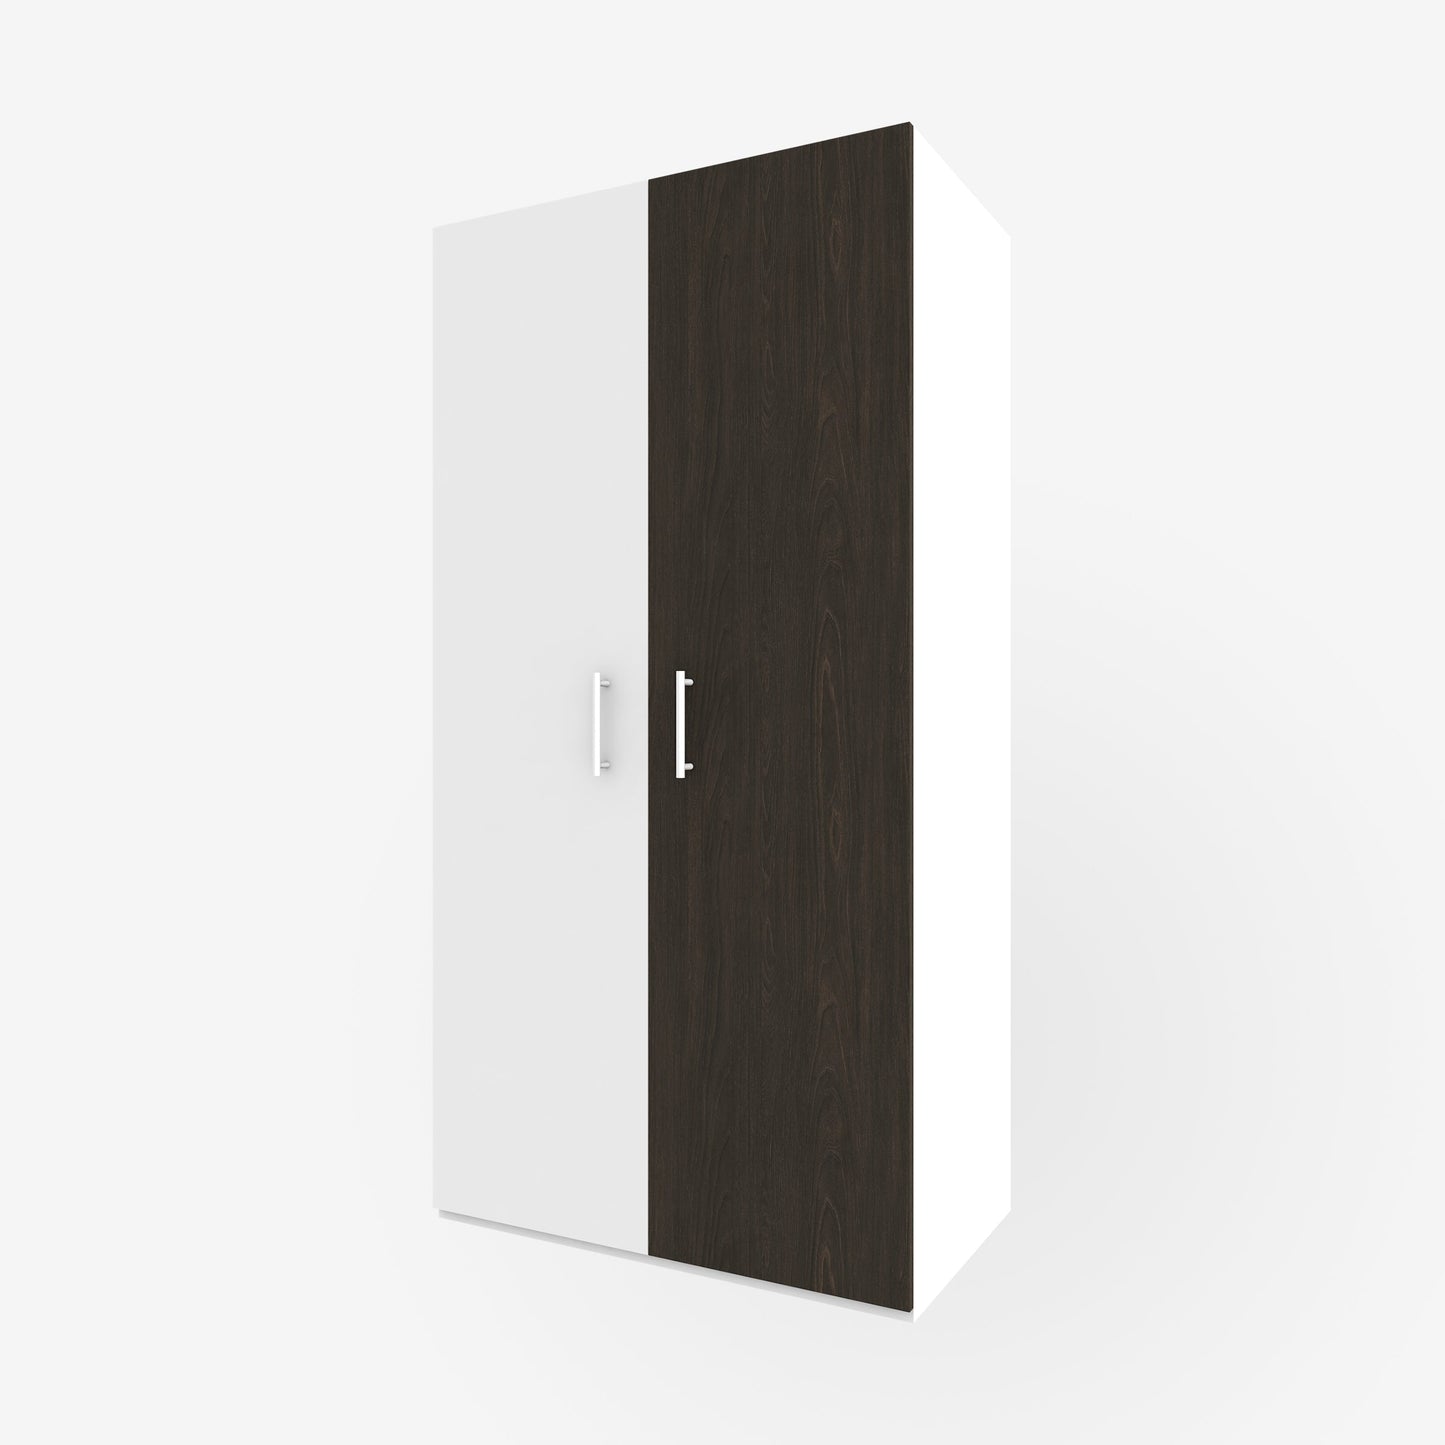 19.5" x 79" dark wood tone westwood slab door for Ikea or swedeboxx pax closet cabinet